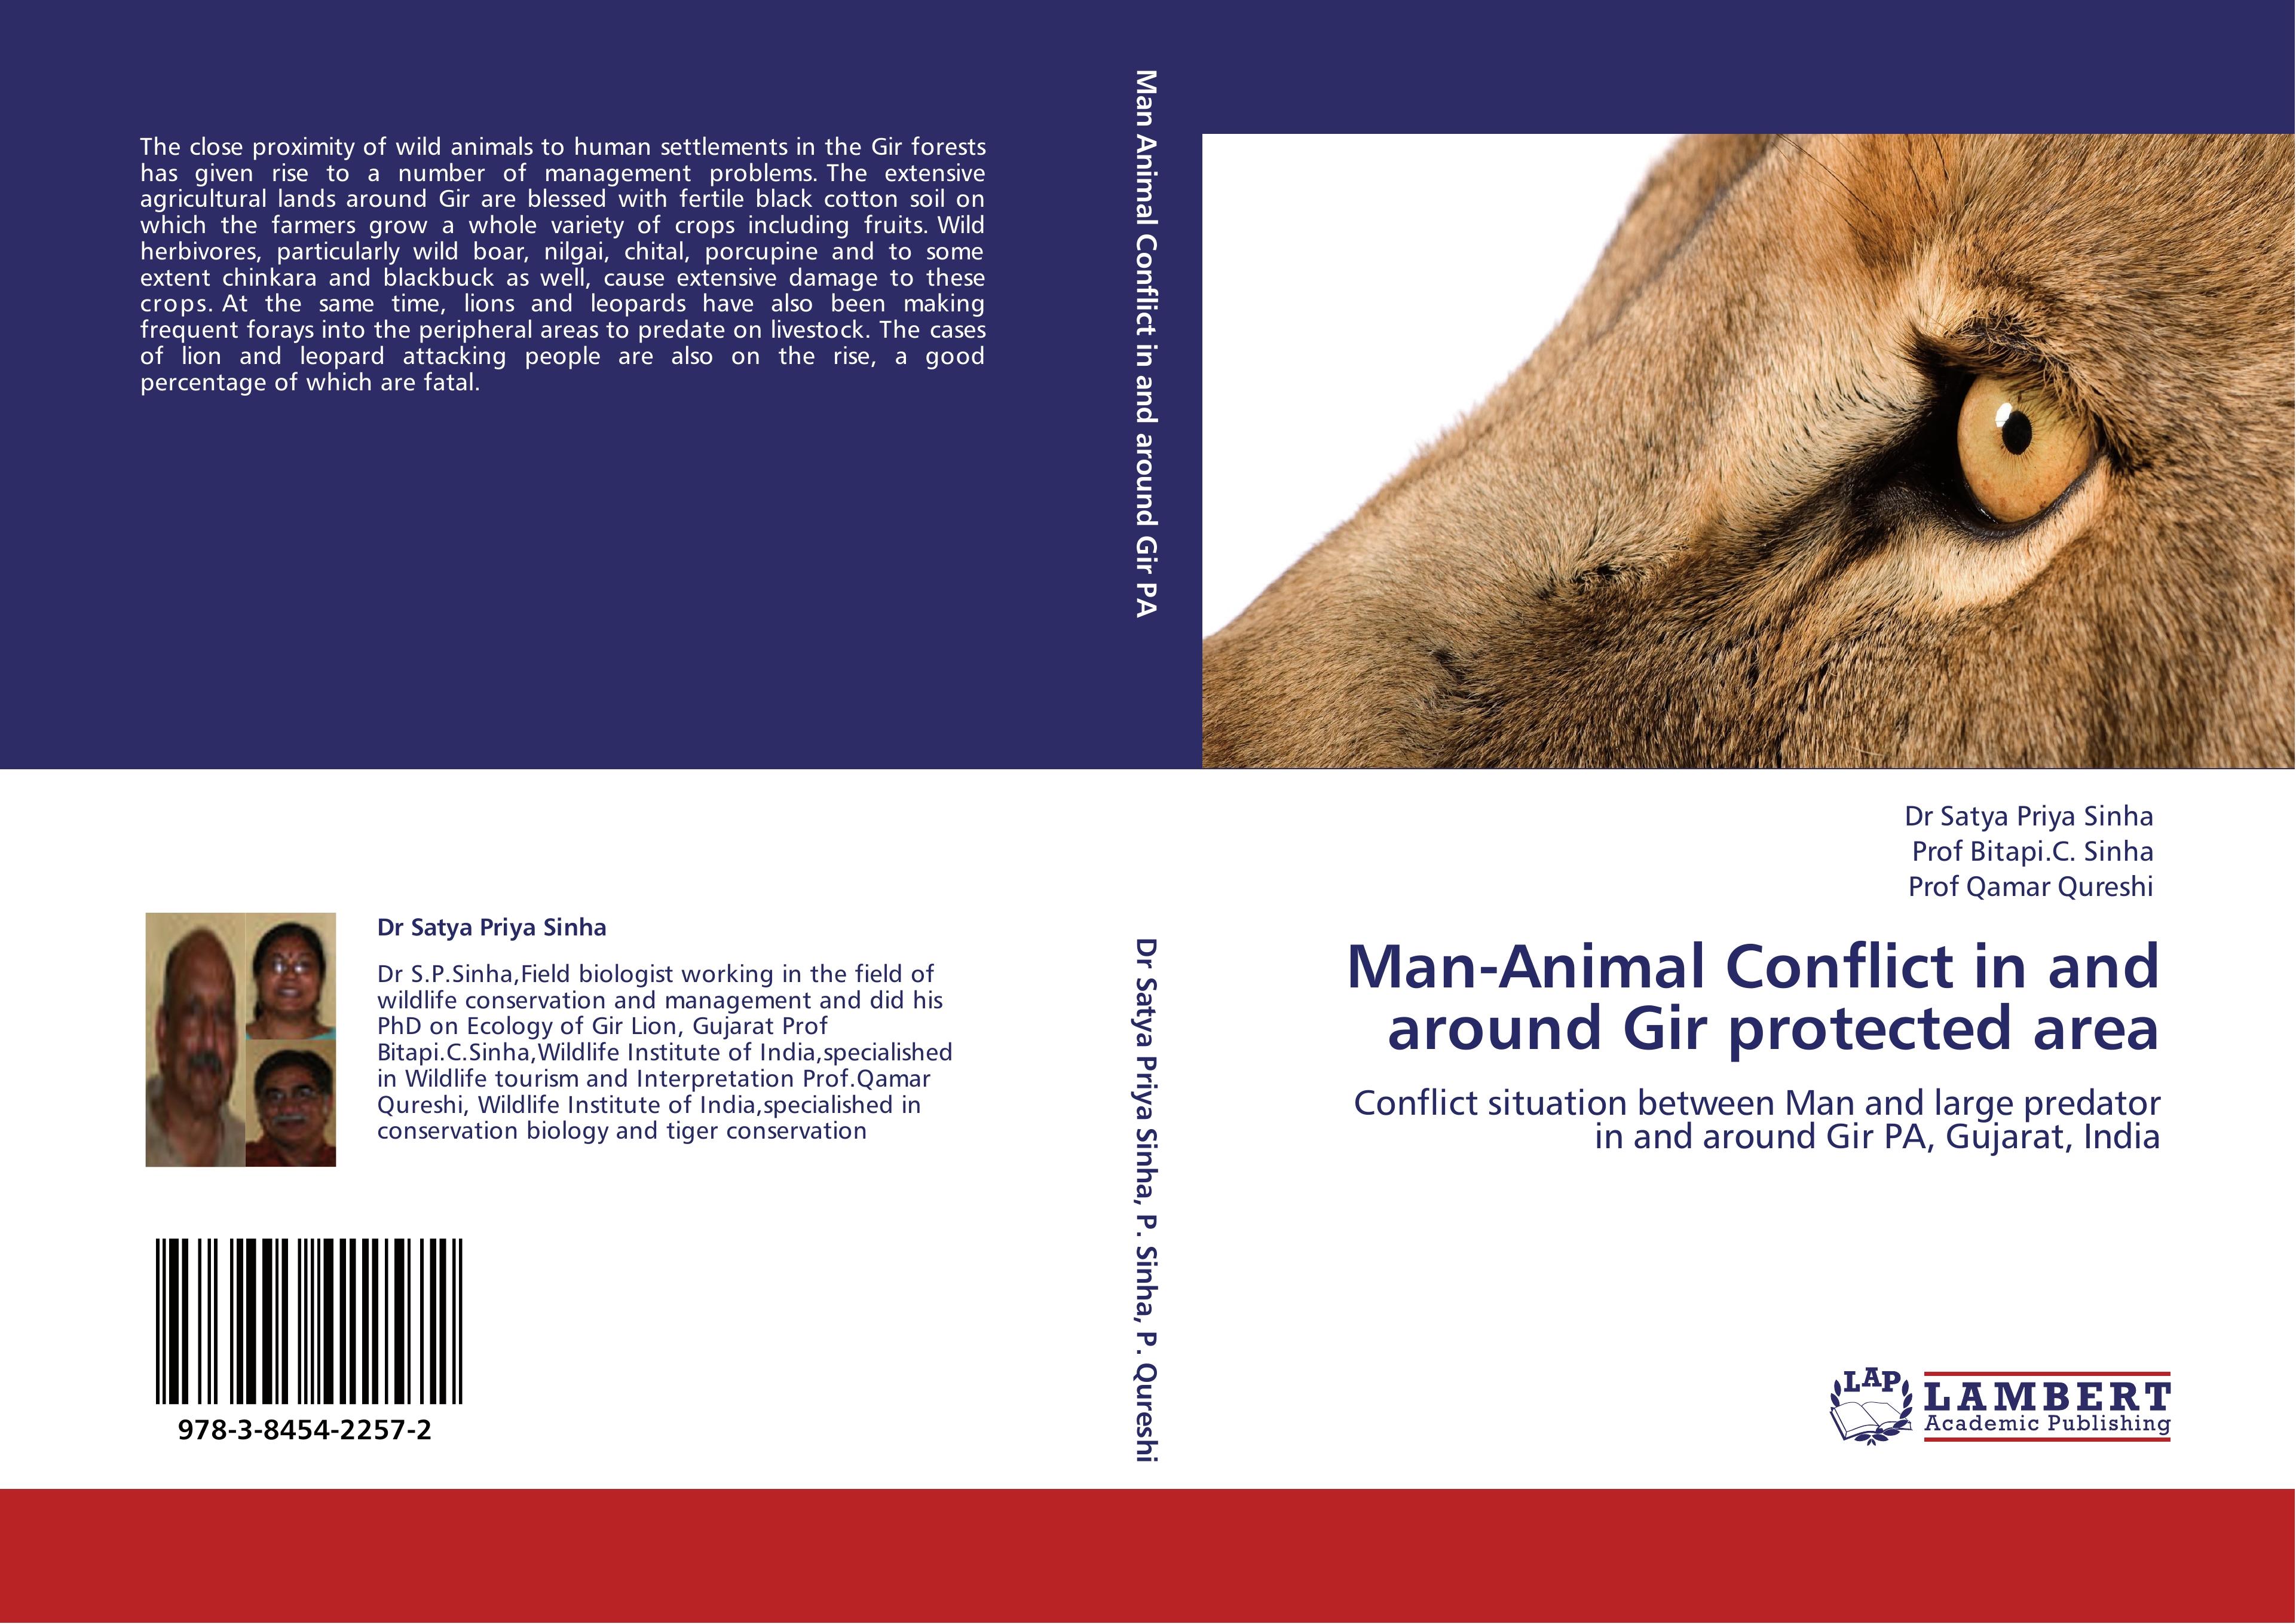 Man-Animal Conflict in and around Gir protected area - Dr Satya Priya Sinha Prof Bitapi.C. Sinha Prof Qamar Qureshi